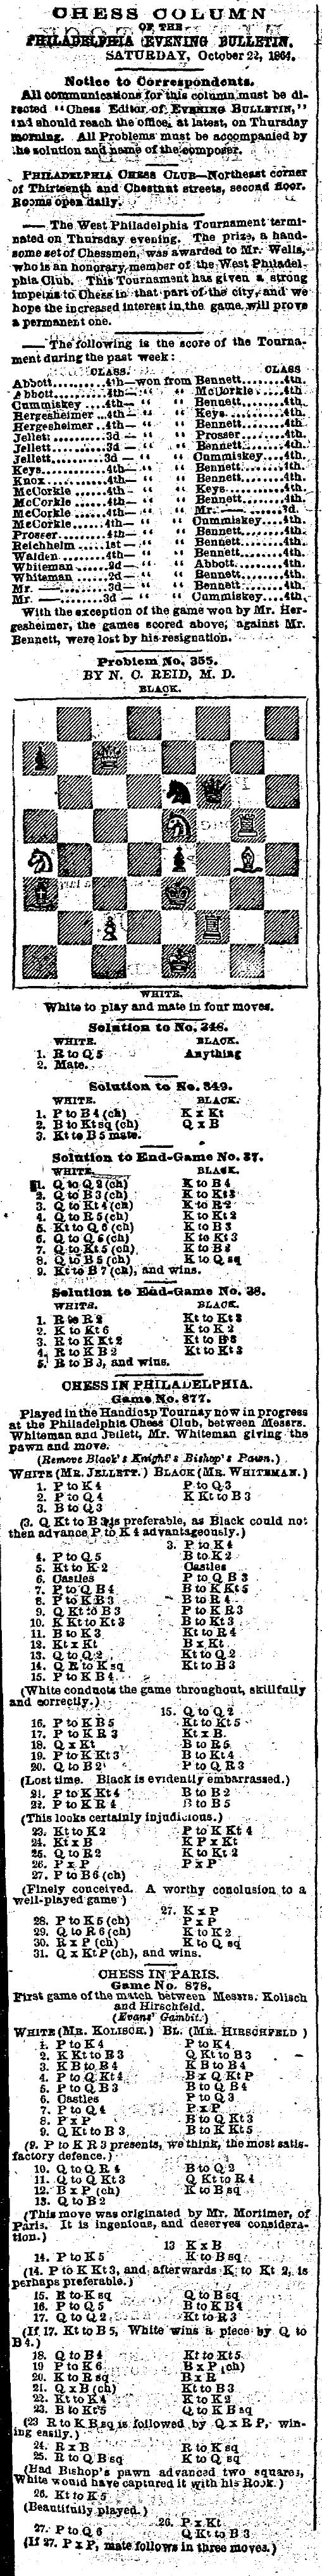 1864.10.22-01 Philadelphia Daily Evening Bulletin.jpg